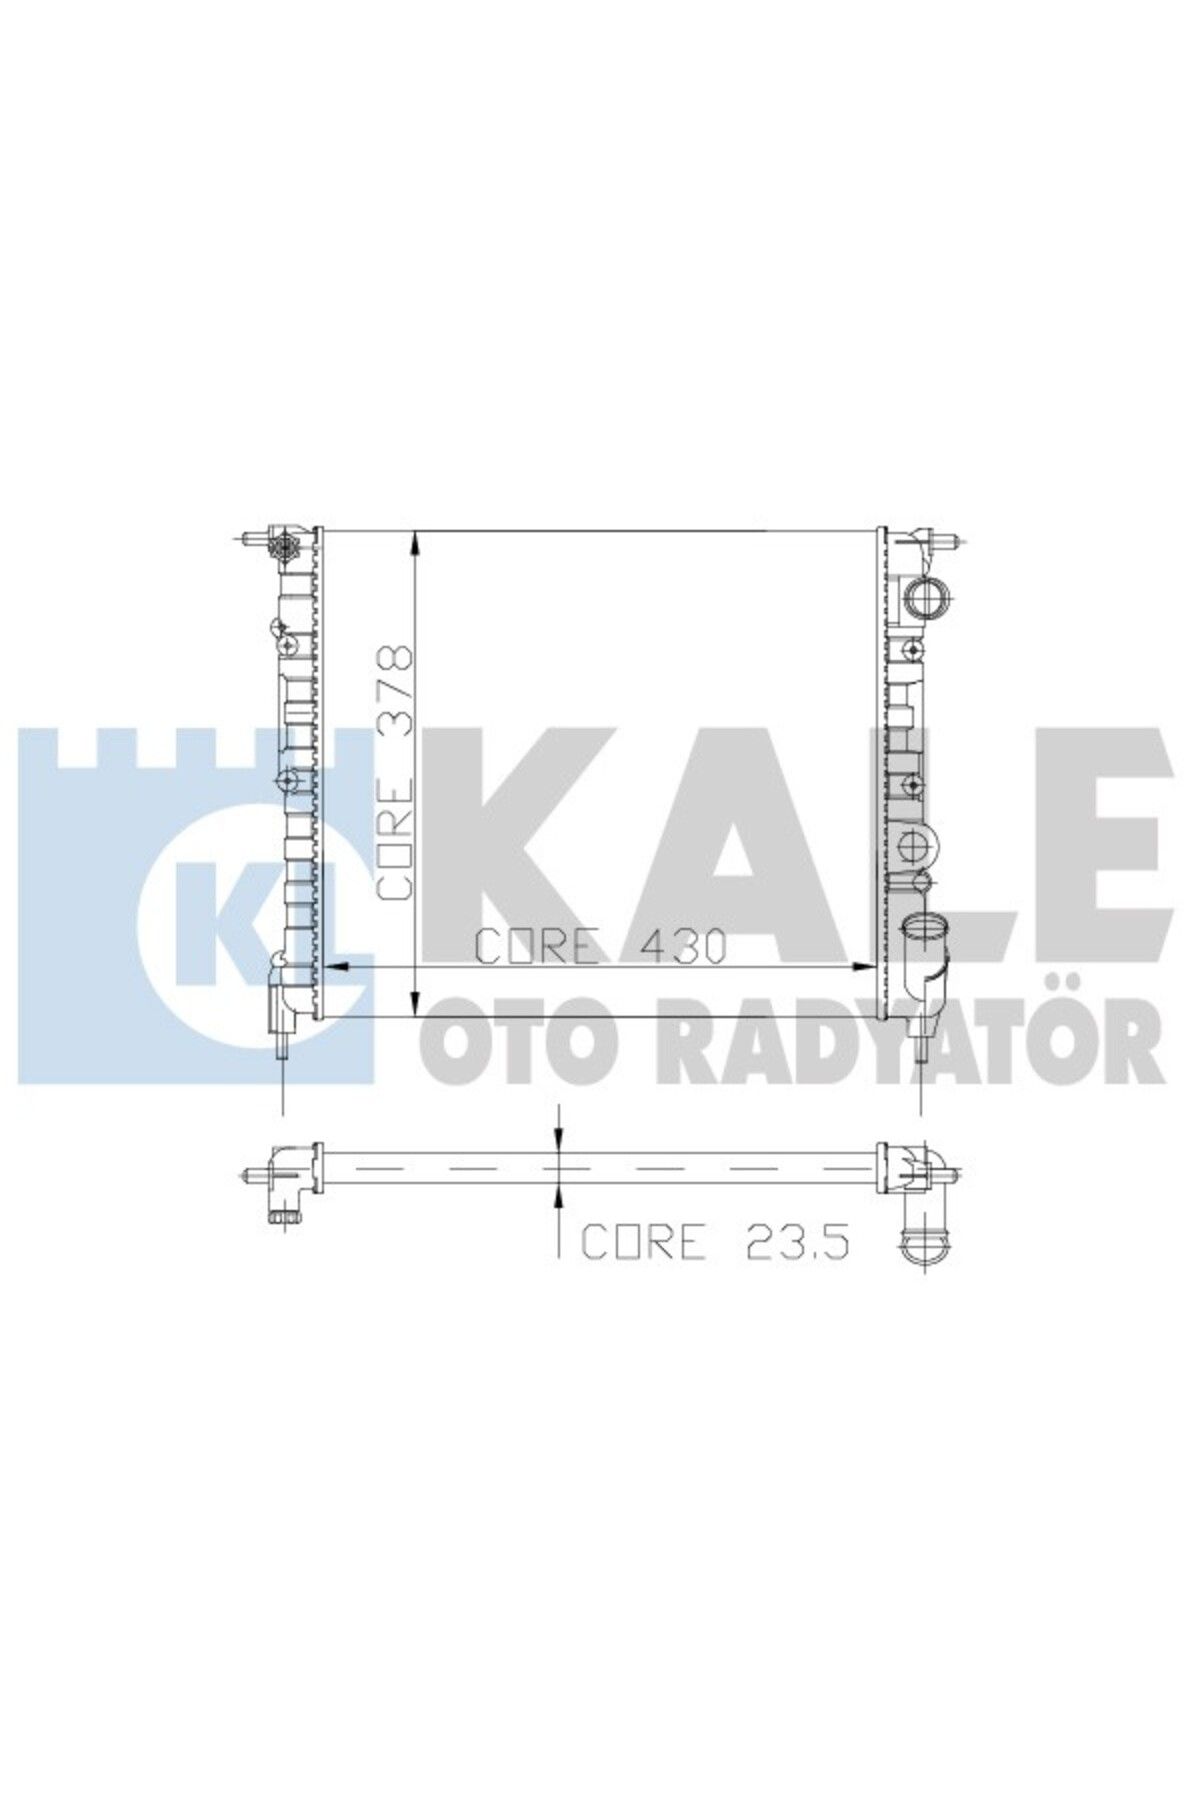 KALE Radyatör Normal R19 1400cc-1.6 Karbüratörlü 2 Sıra Al Pl Sistem